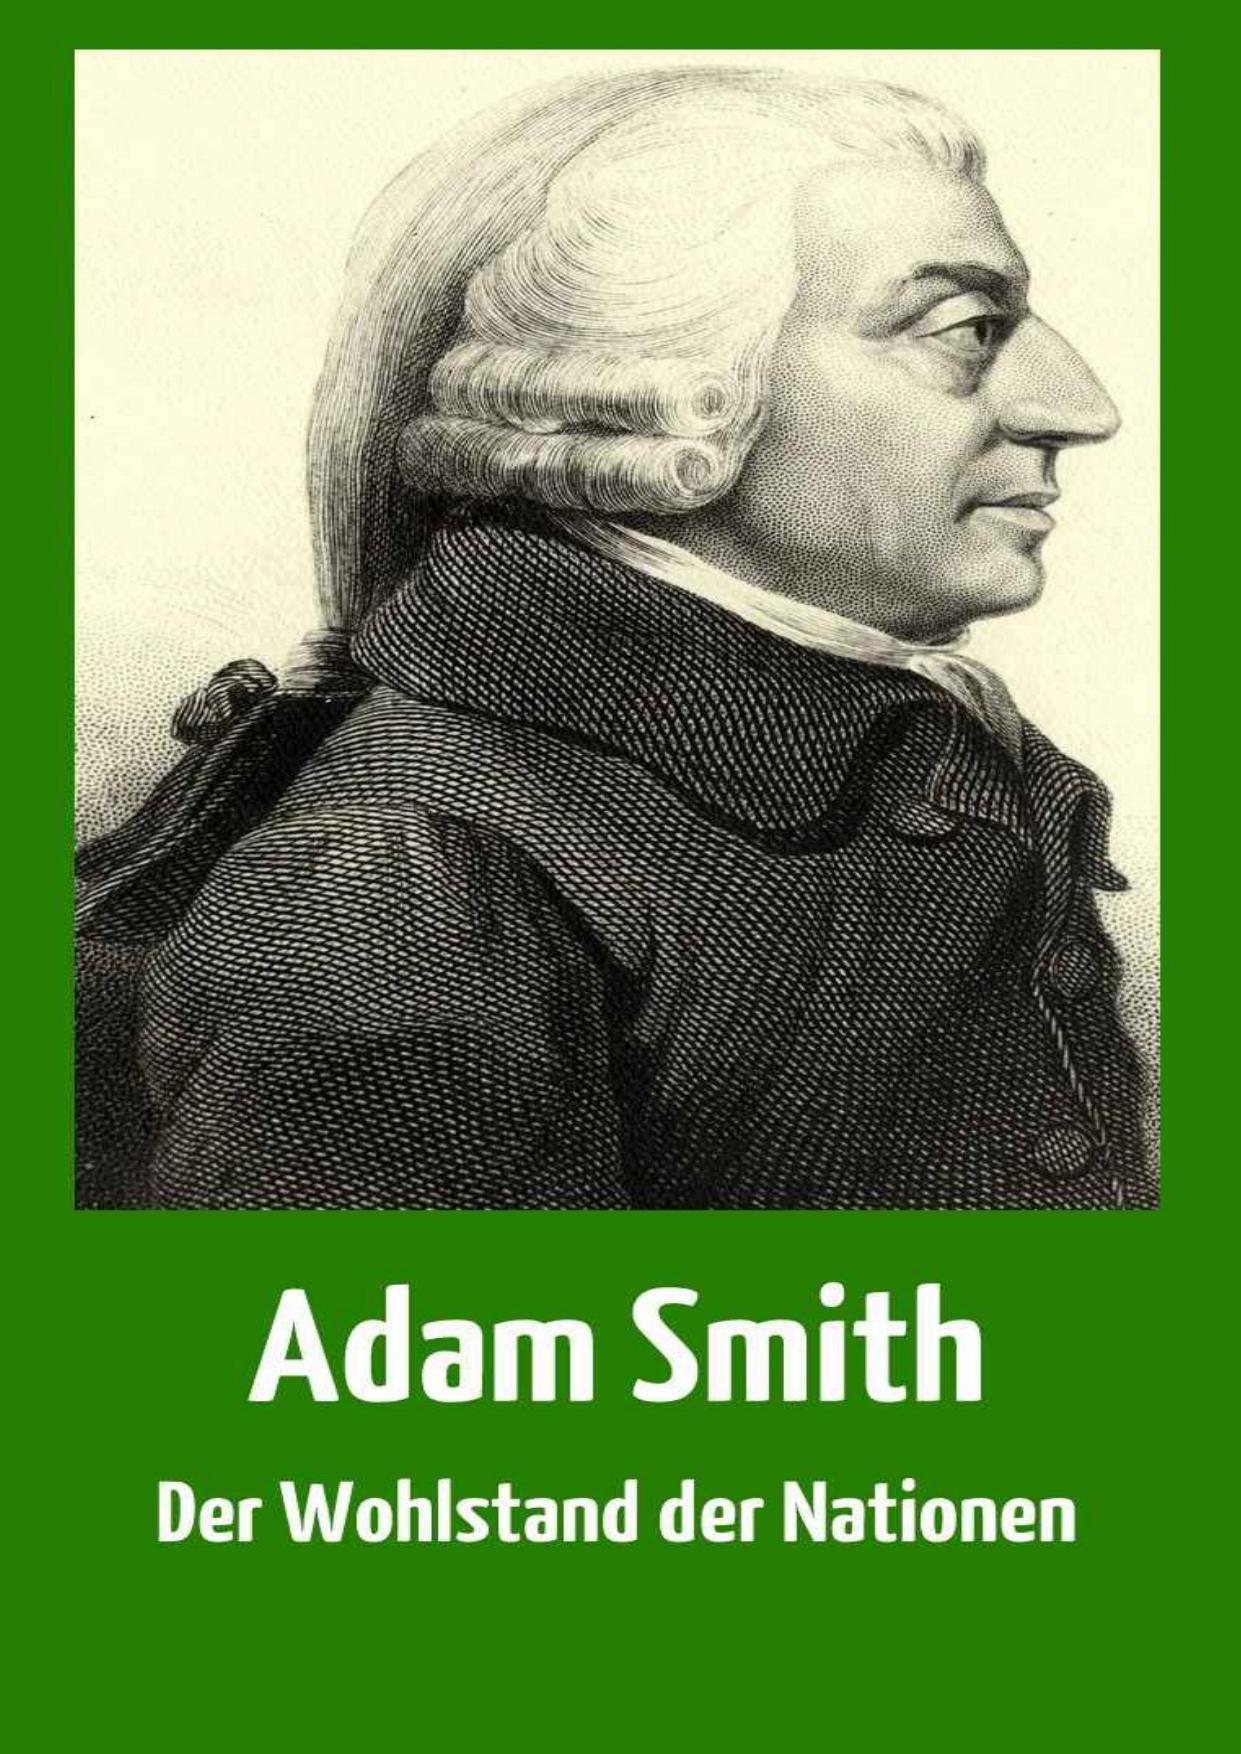 Adam Smith: Selected Philosophical Writings